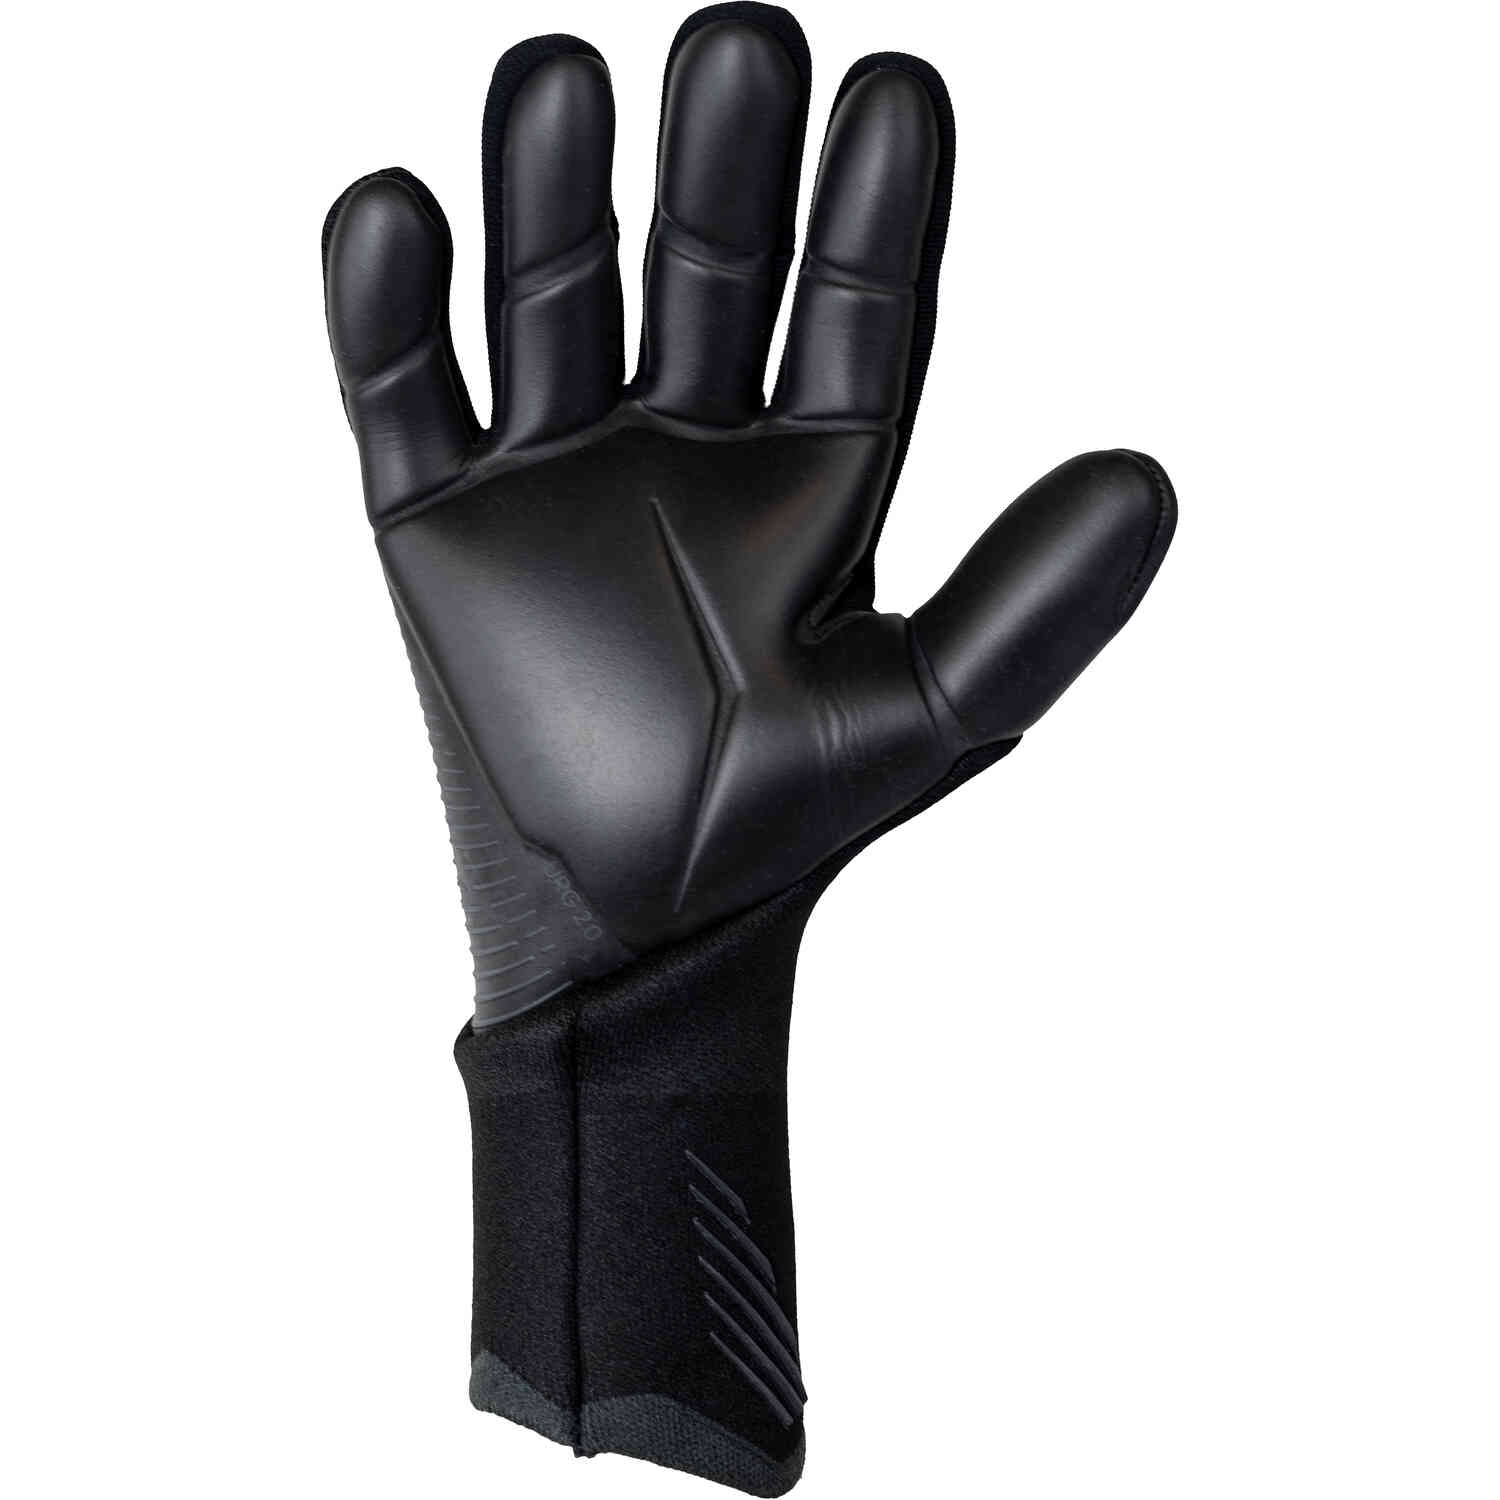 adidas Predator GL Pro Goalkeeper Gloves - Black